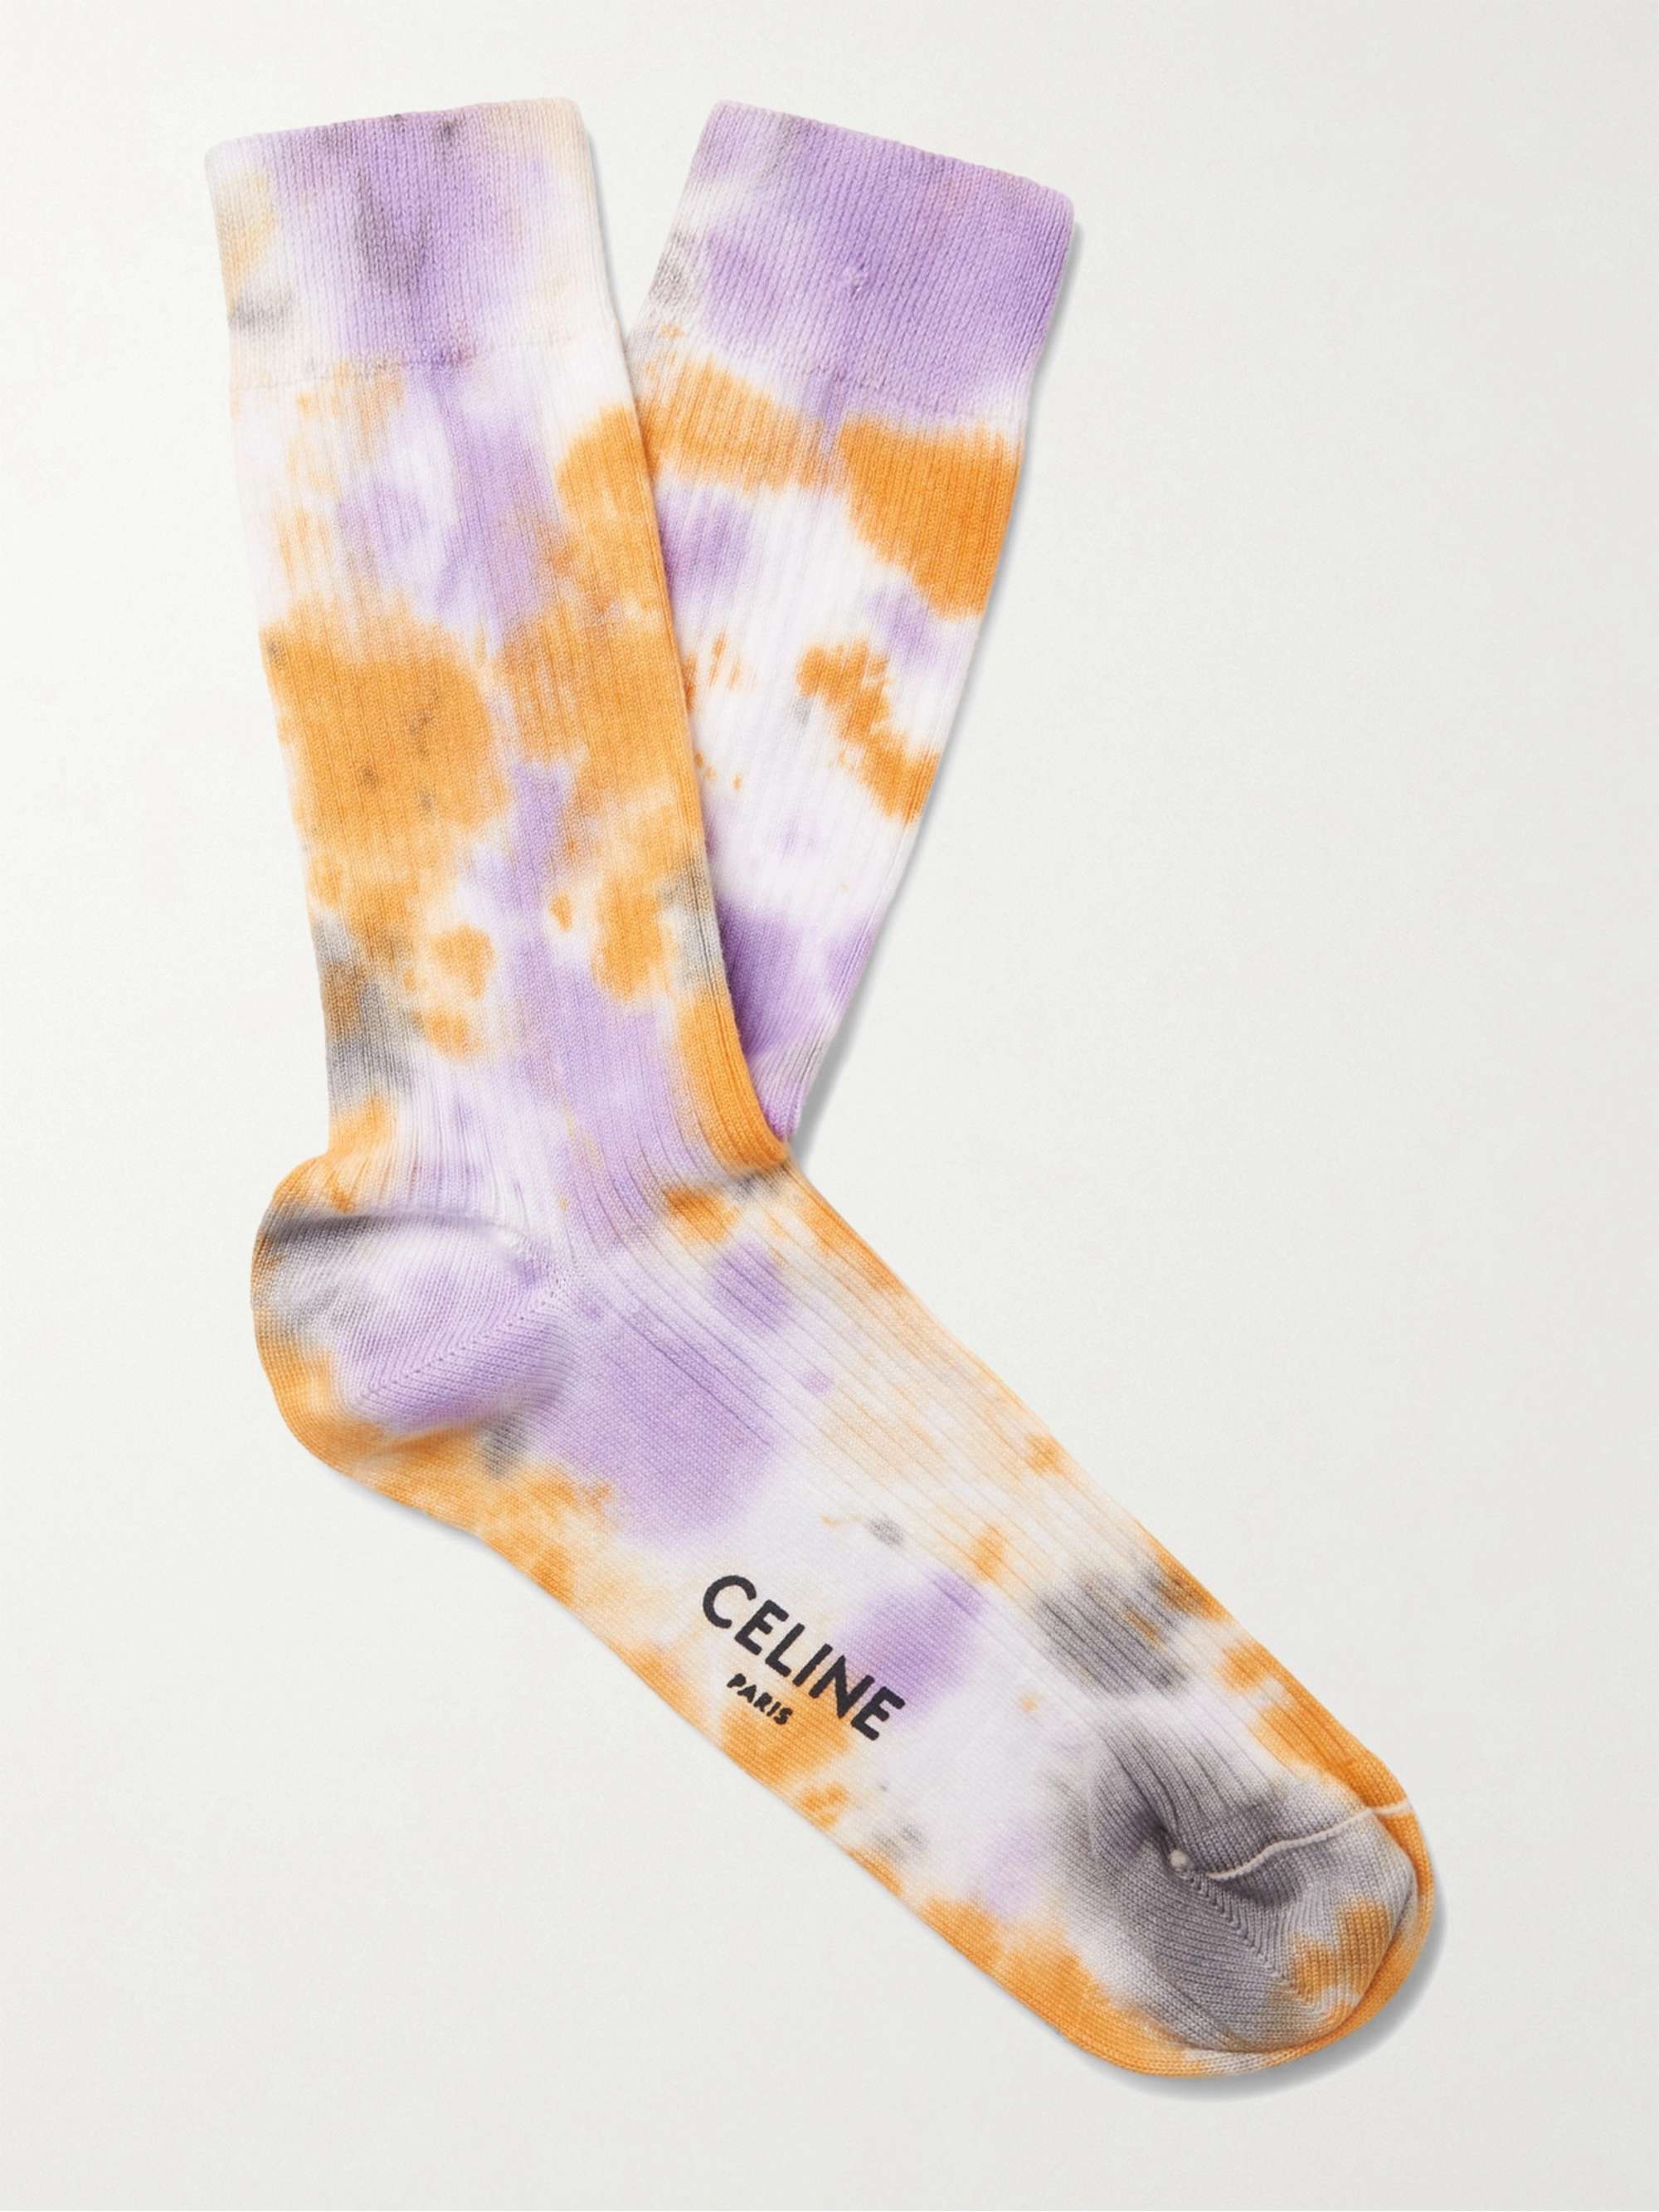 CELINE HOMME Tie-Dyed Cotton Socks